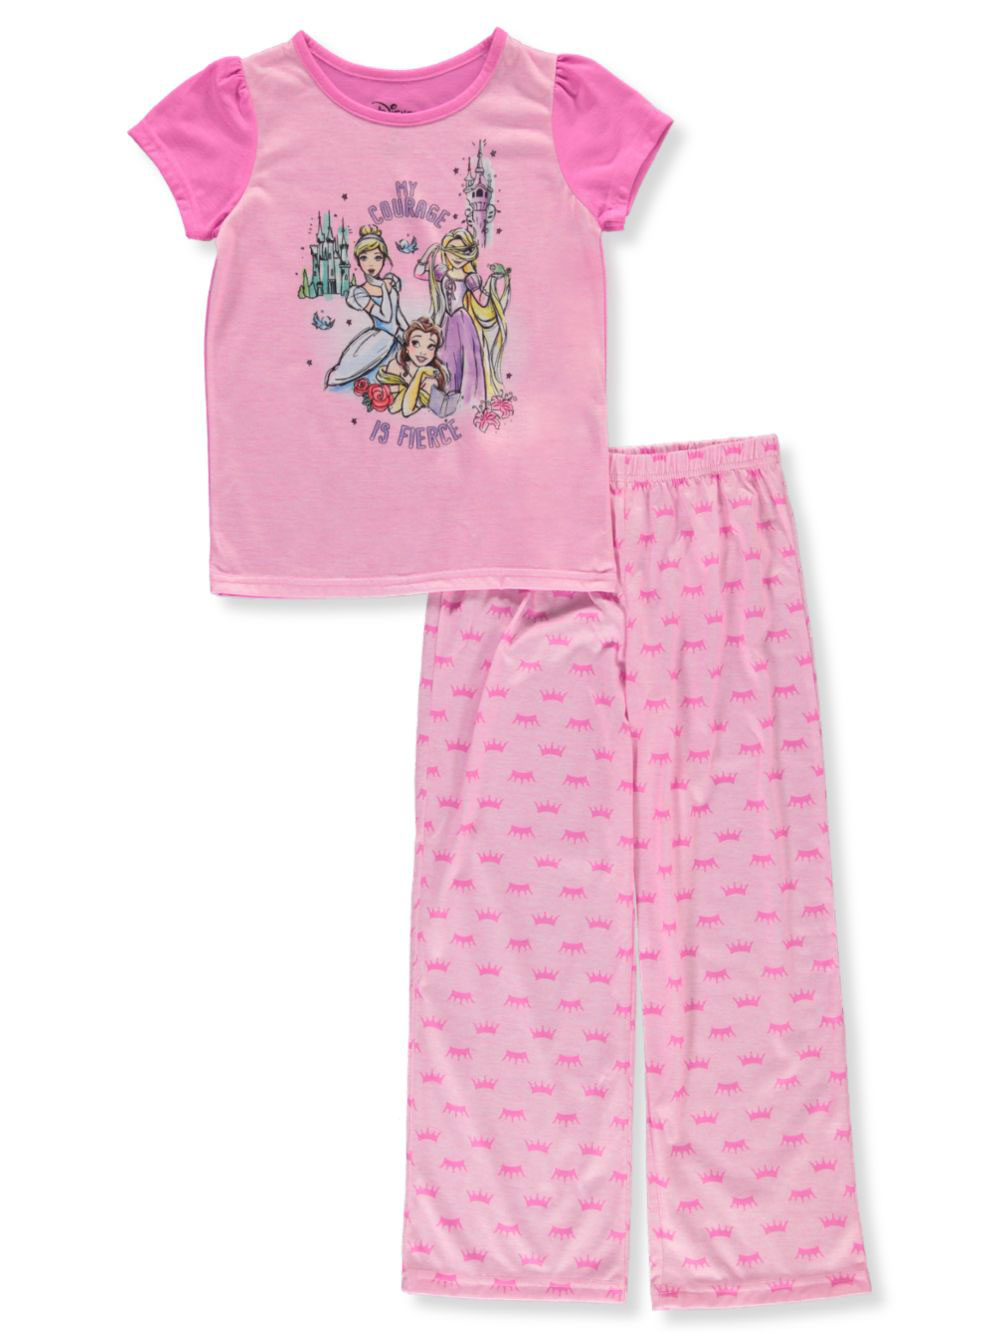 Size 8-10 Pajamas for Girls